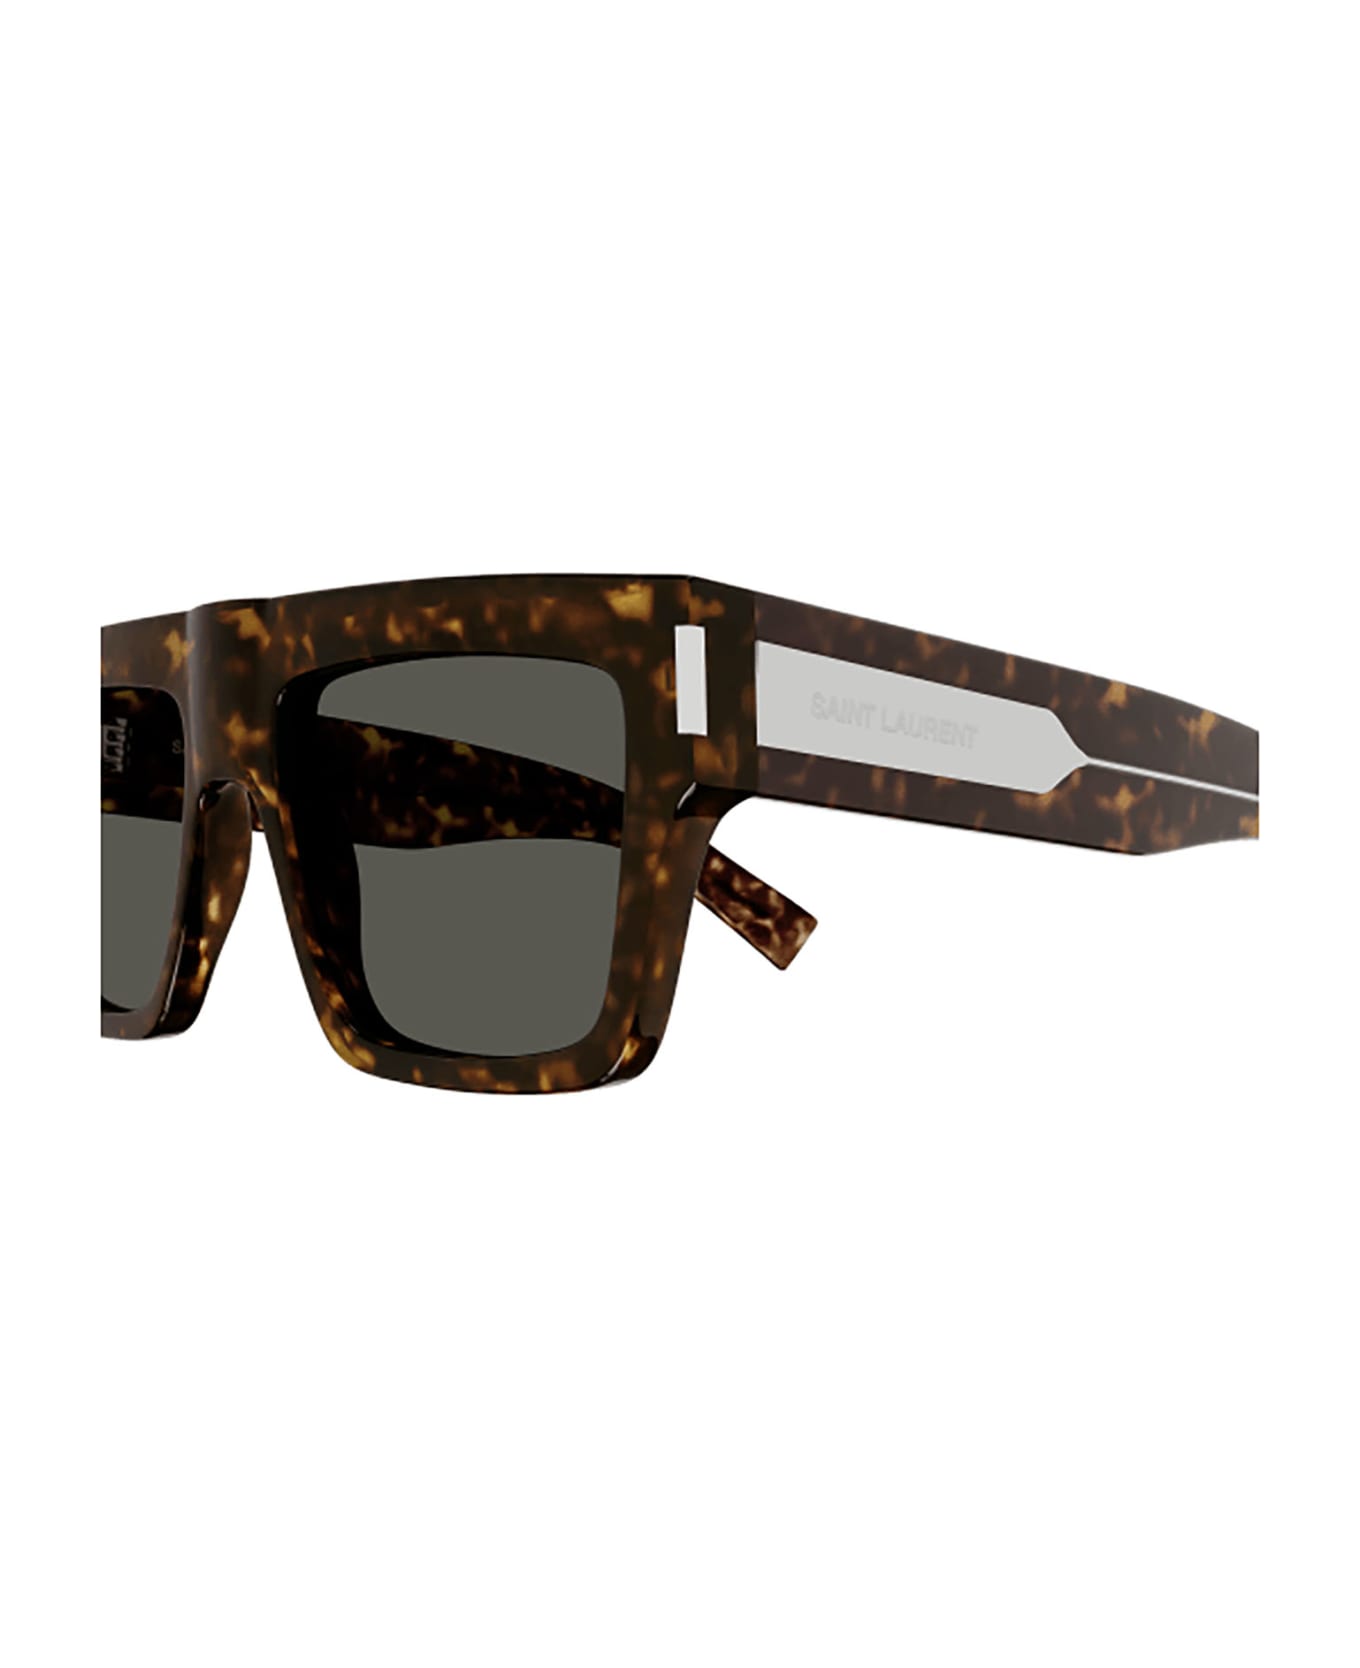 Saint Laurent Eyewear SL 628 Sunglasses - Havana Crystal Grey